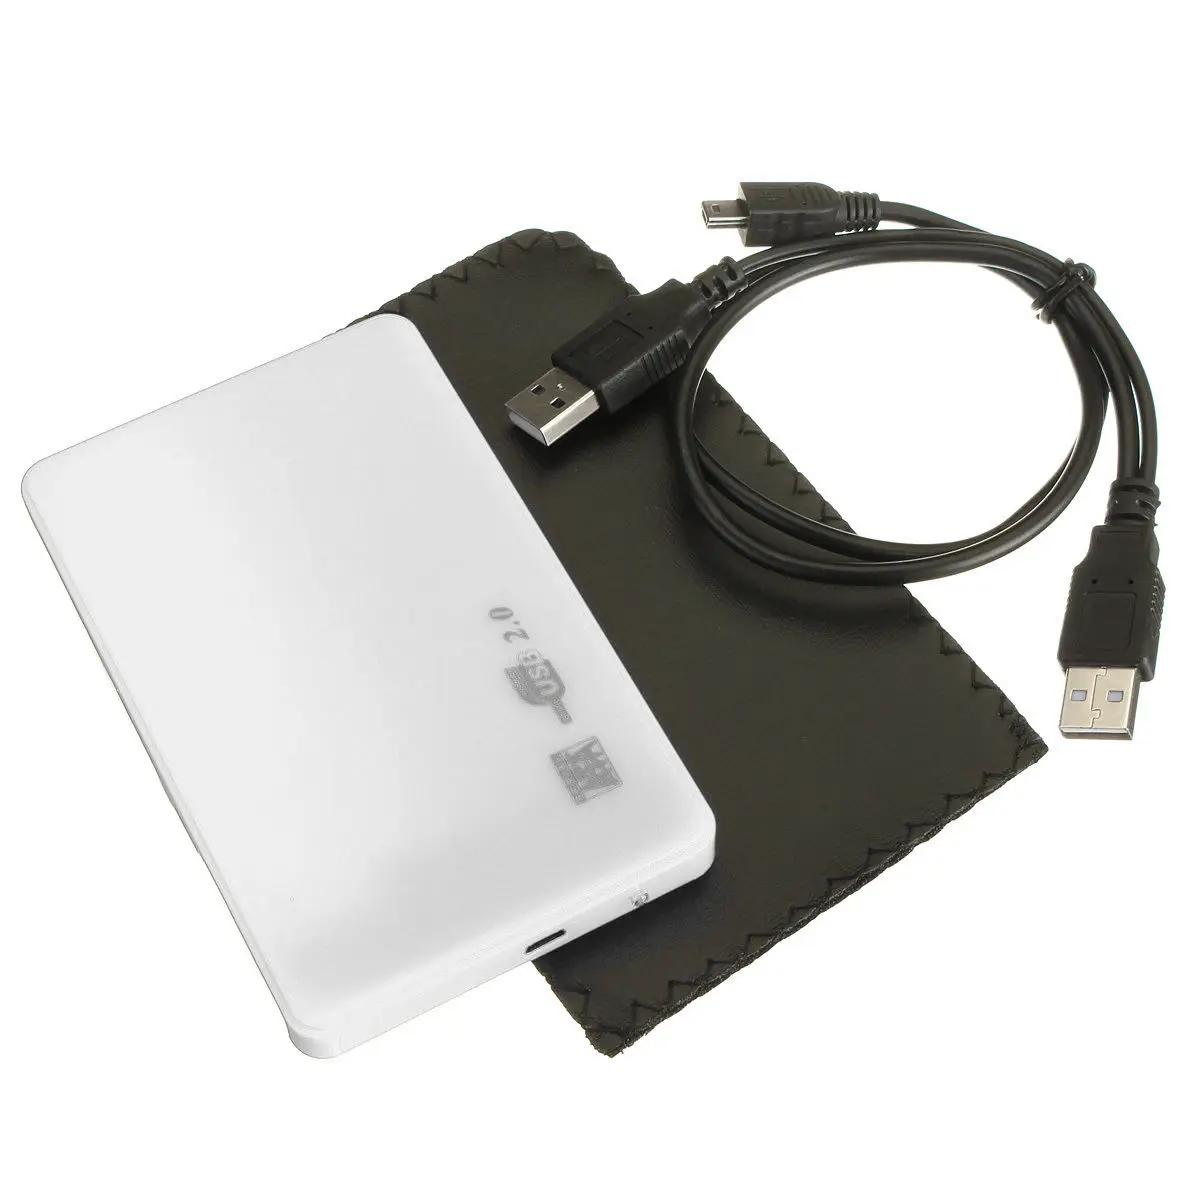 SATA USB 2,0/3,0 SATA 2," HD HDD корпус жесткого диска Внешний чехол Белый ABS Мини портативный внешний жесткий диск чехол